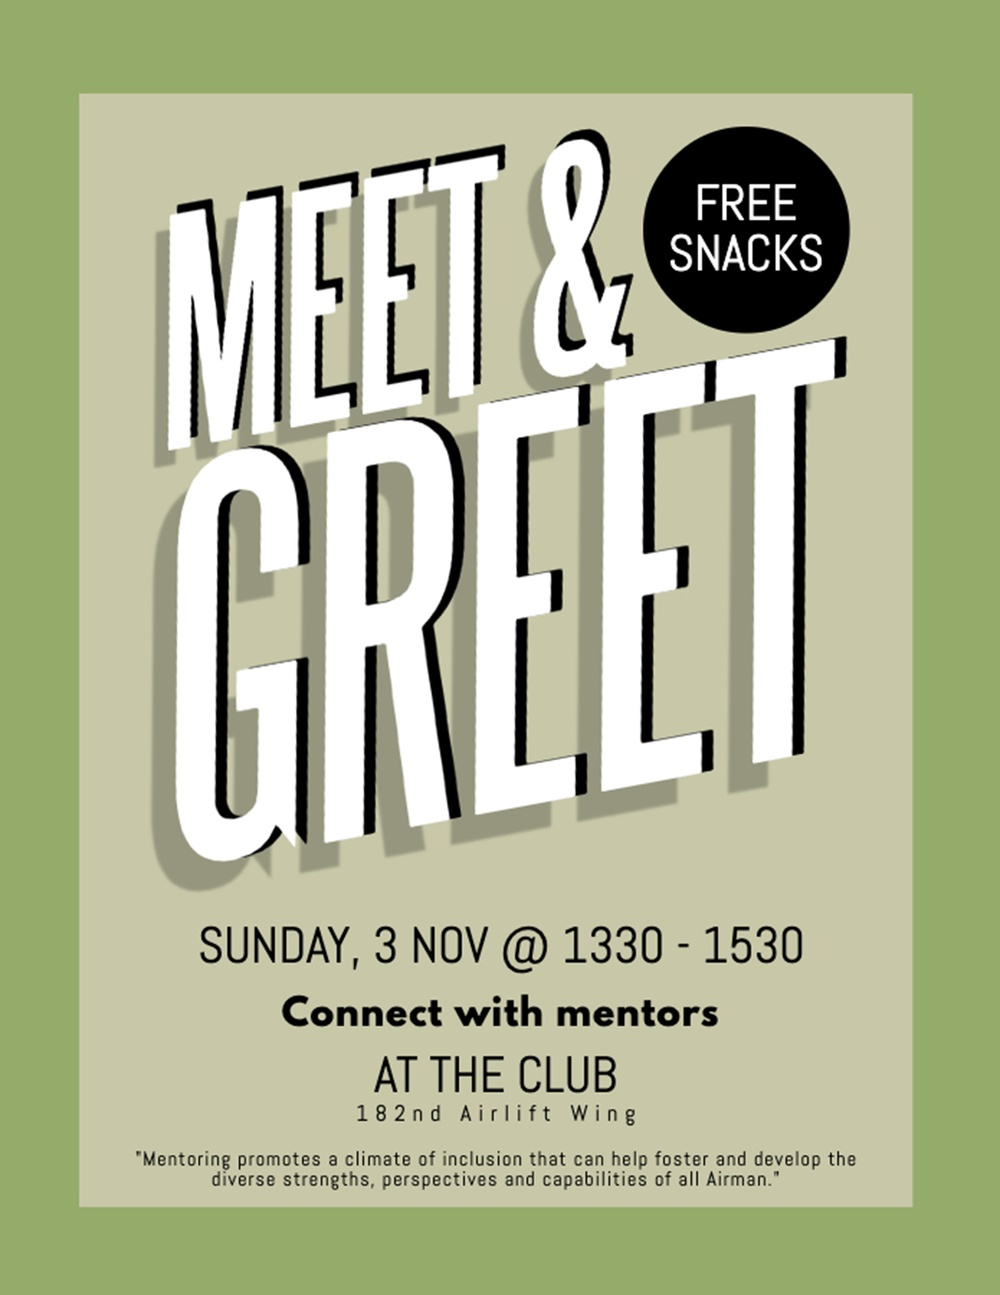 Meet and Greet